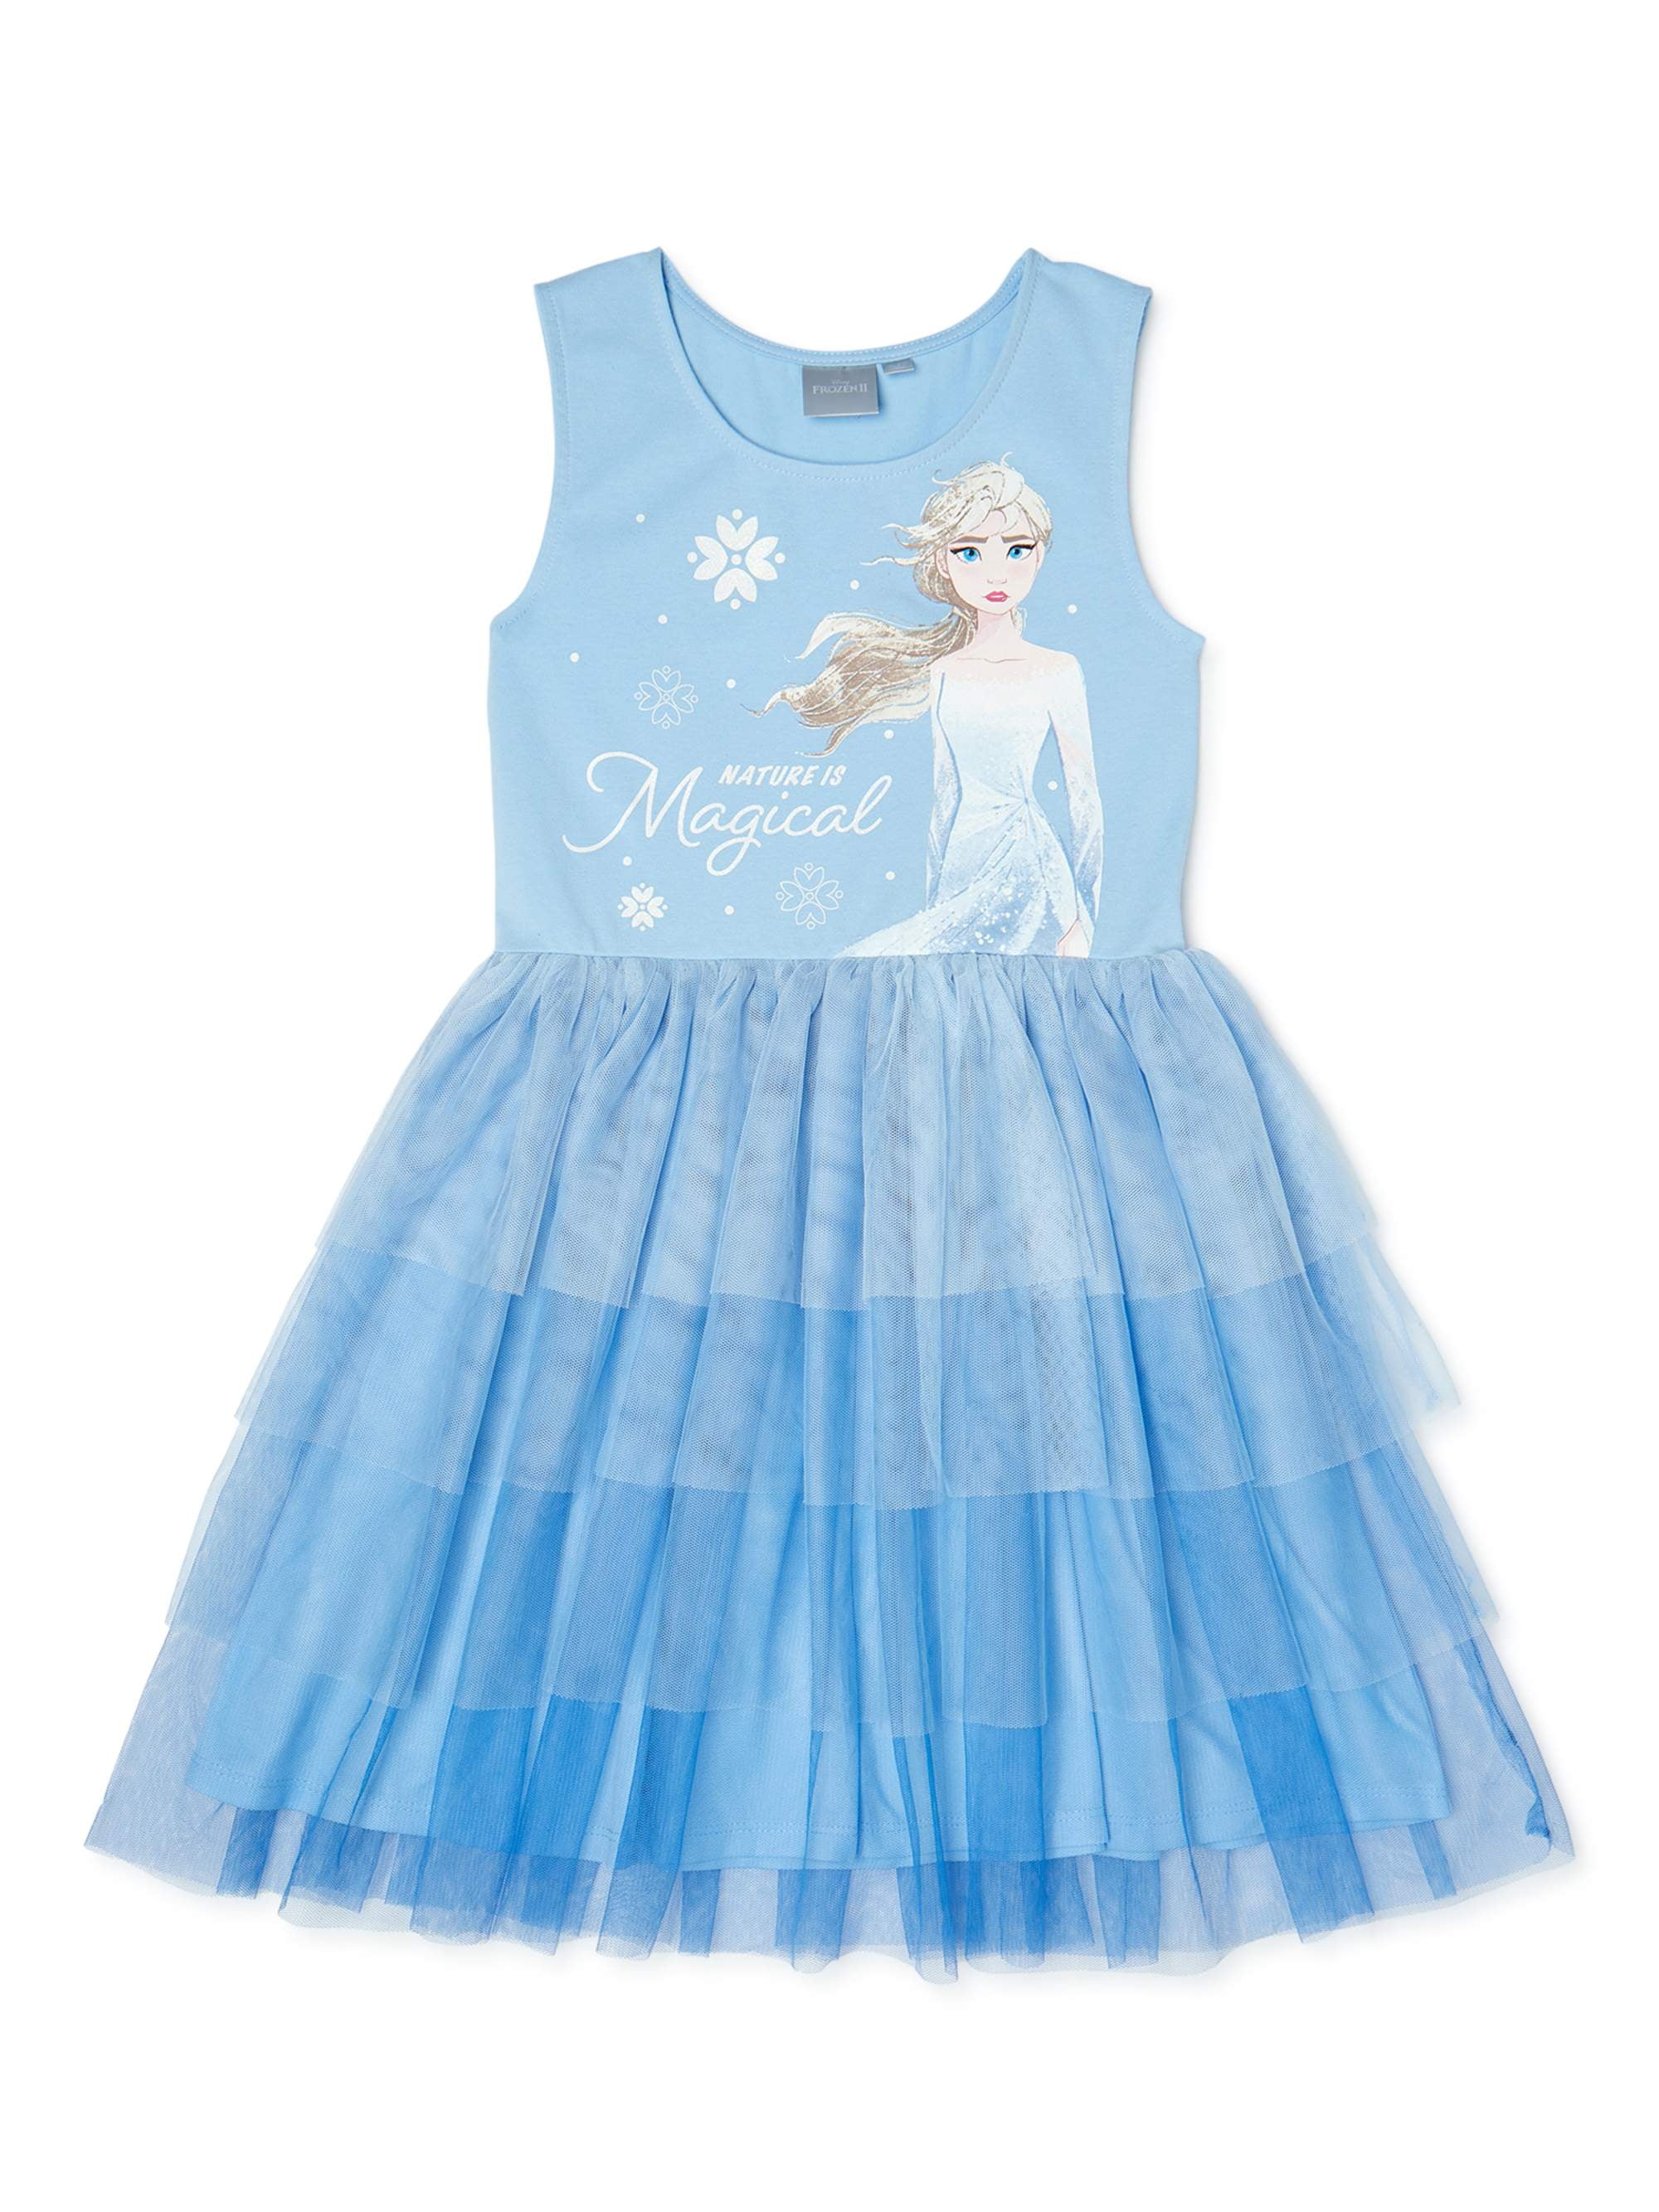 7/8 10/12 NWT NEW Girls Tutu Dress Frozen Elsa Princess Party Birthday Size 6